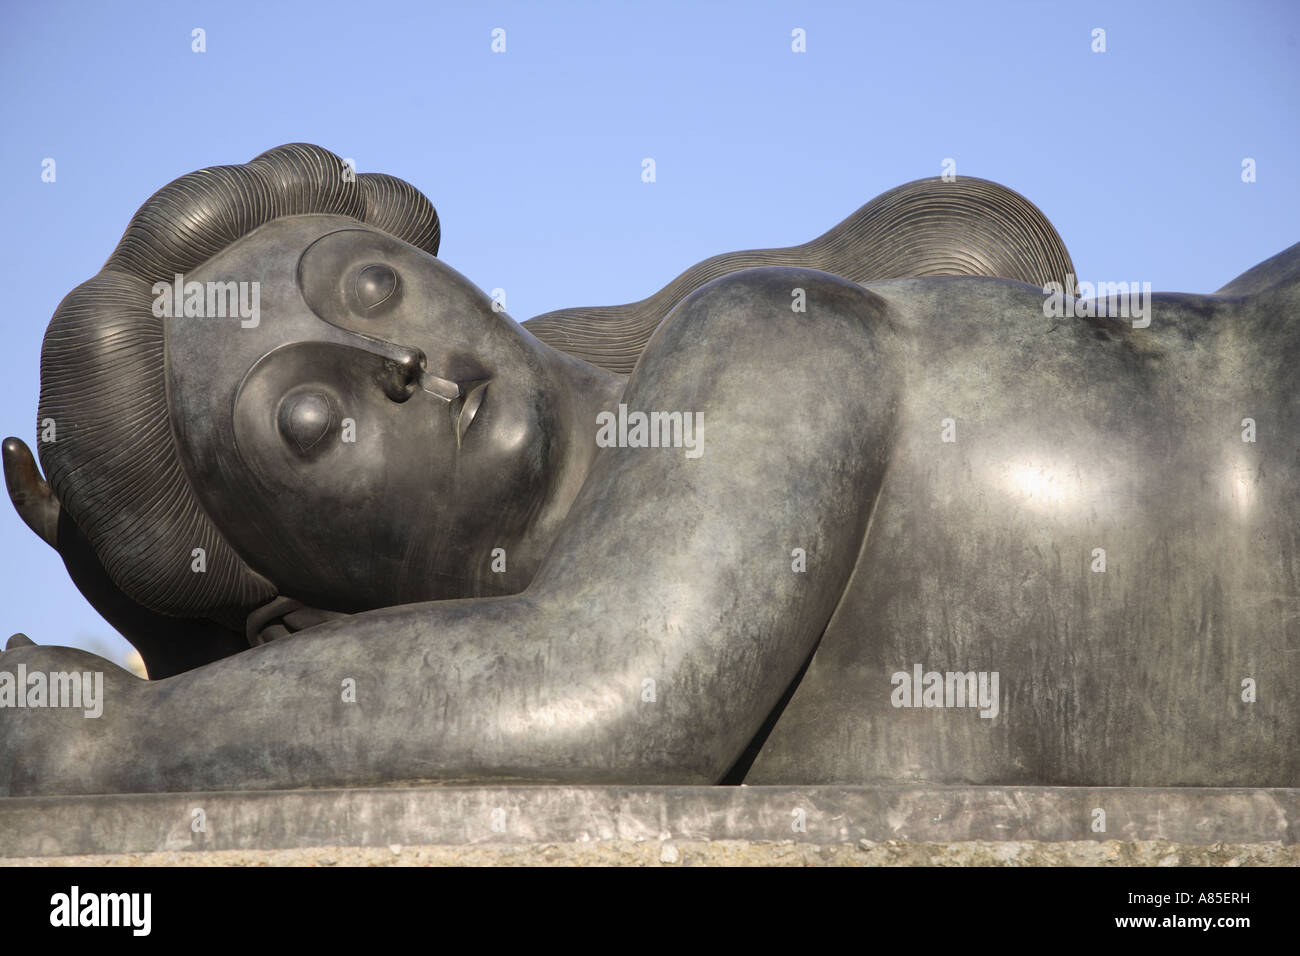 Sculpture de Fernando Botero, Plaza de Colón, Madrid, Espagne Banque D'Images